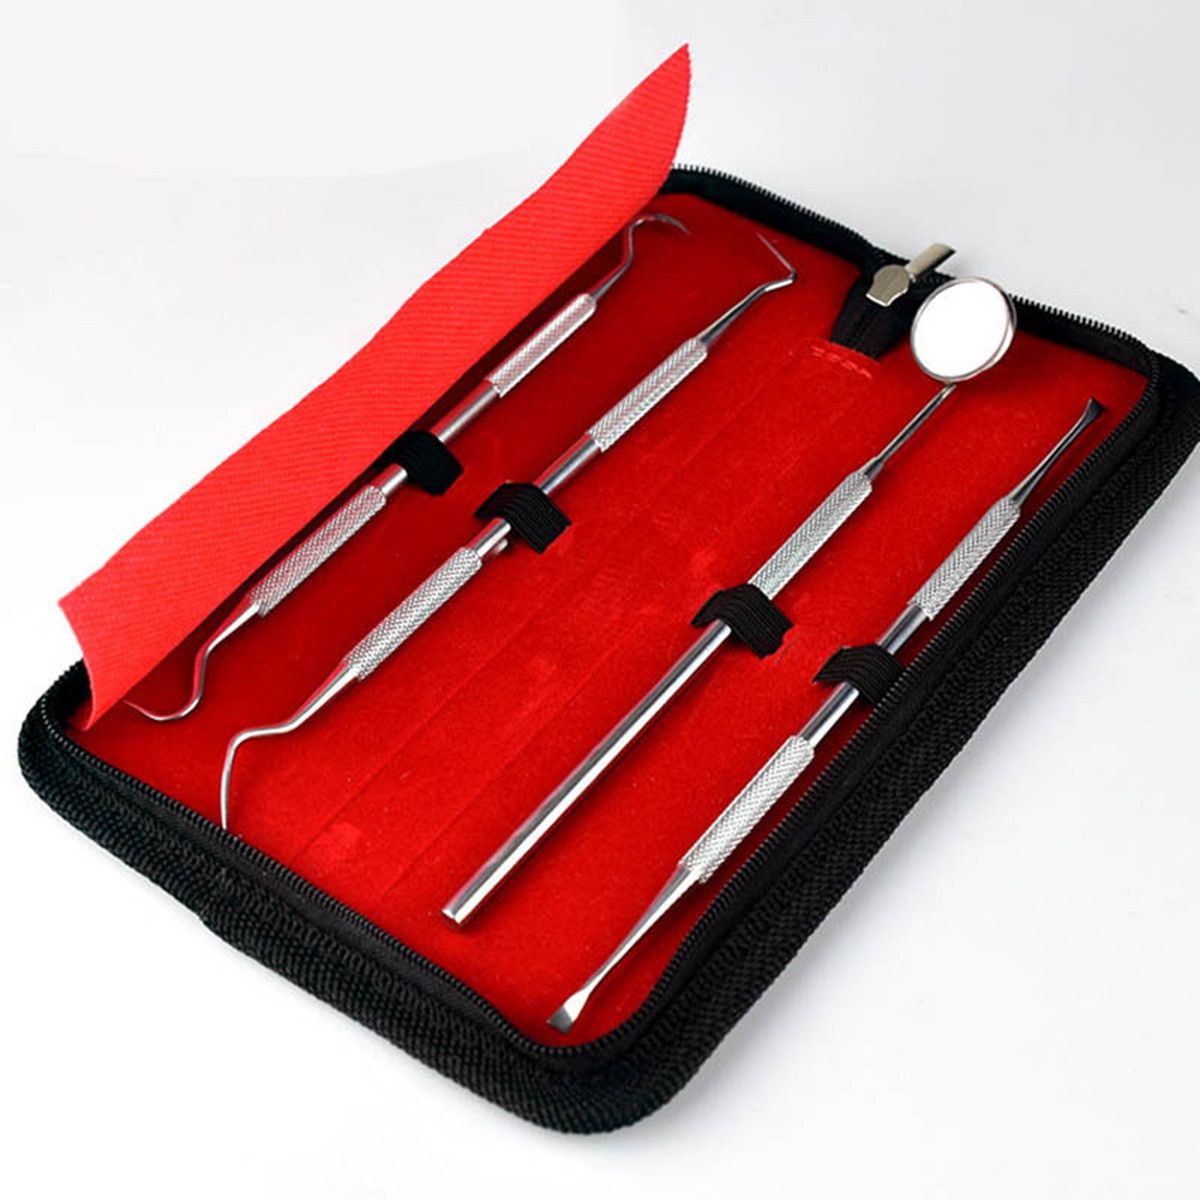 4Pcs-Dental-Mirror-Stainless-Steel-Dental-Tools-Kit-Mouth-Mirror-Dental-Kit-Instrument-Dental-Pick-1373609